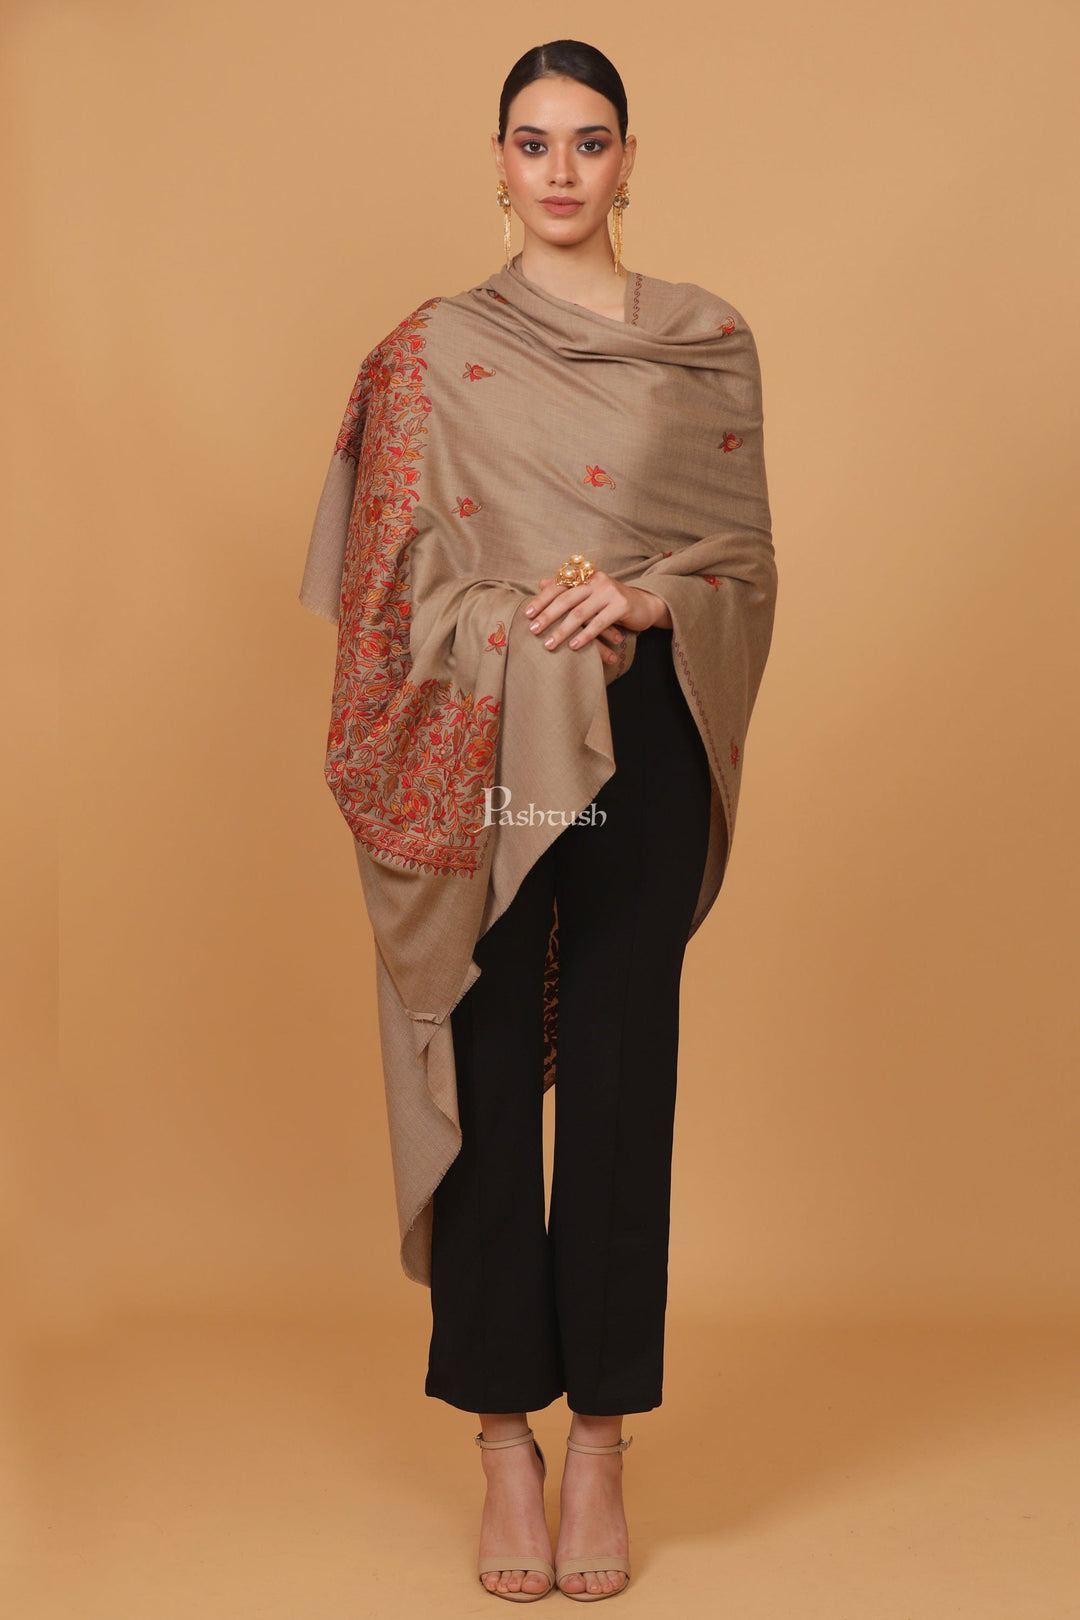 Pashtush India Womens Stoles and Scarves Scarf Pashtush womens Fine Wool shawl, papier mache palla design, Beige